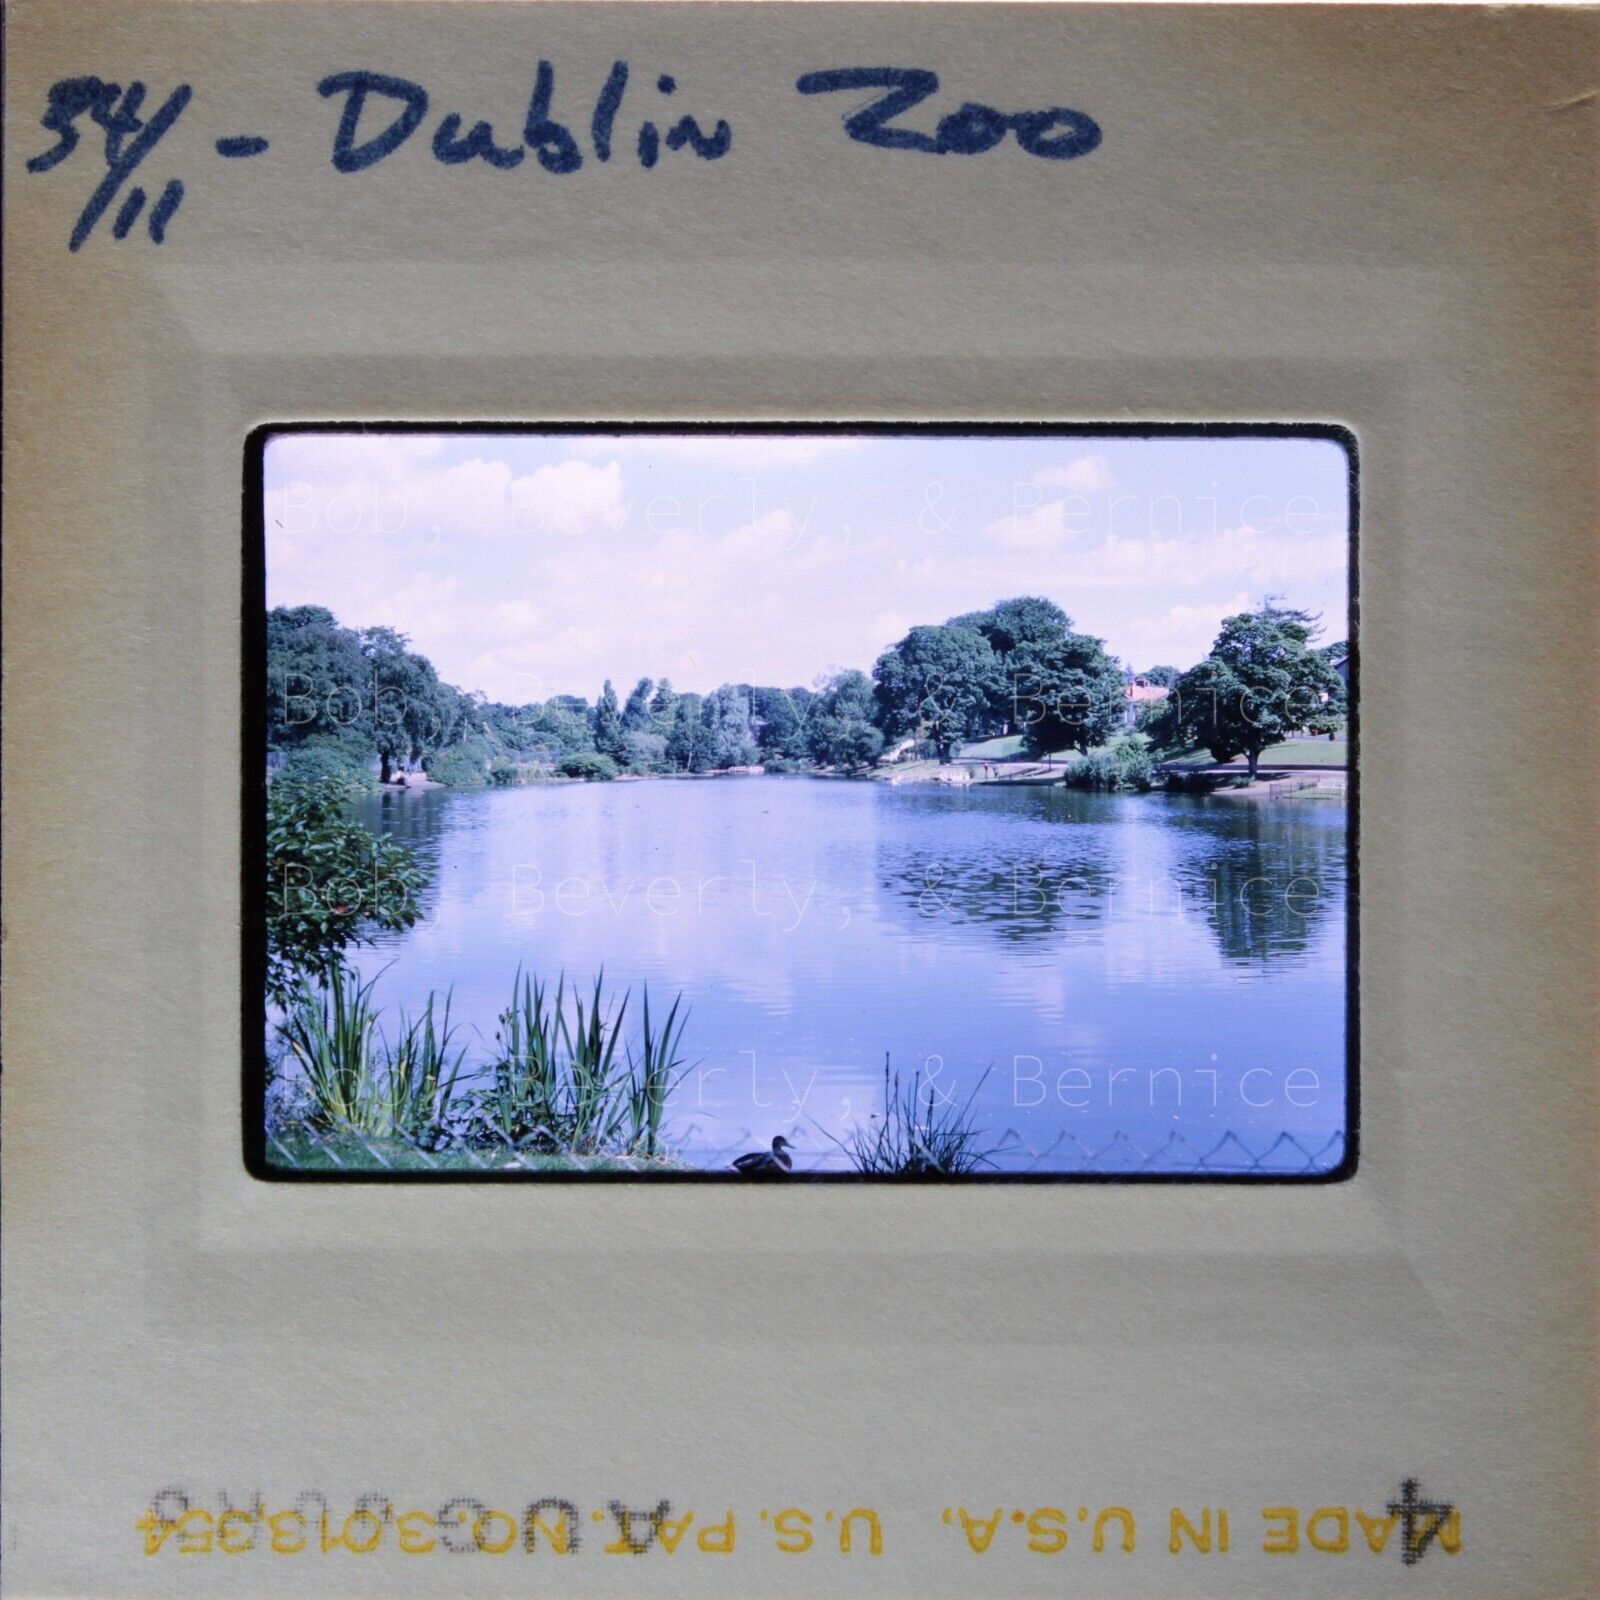 Vintage 35mm Slide Photo — Ireland Dublin Zoo Water Duck Lake Trees Sky — 1968